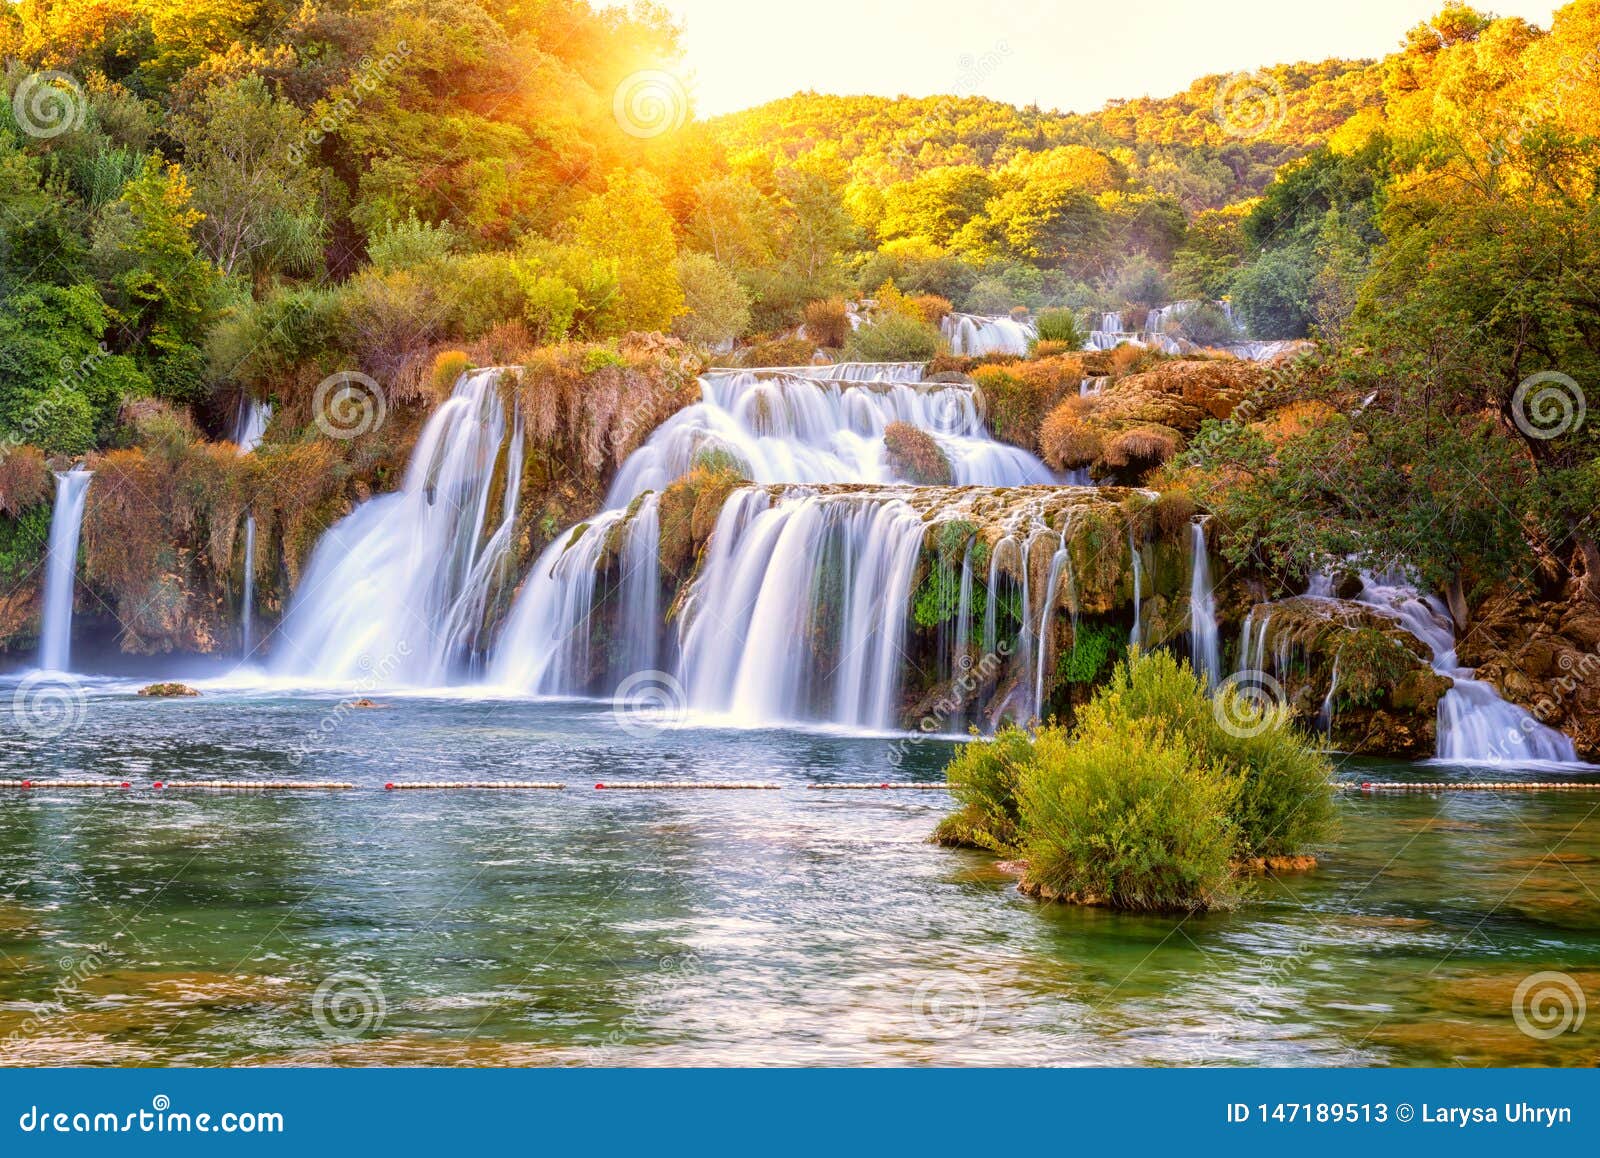 amazing nature landscape, famous waterfall skradinski buk at sunrise, croatia, outdoor travel background